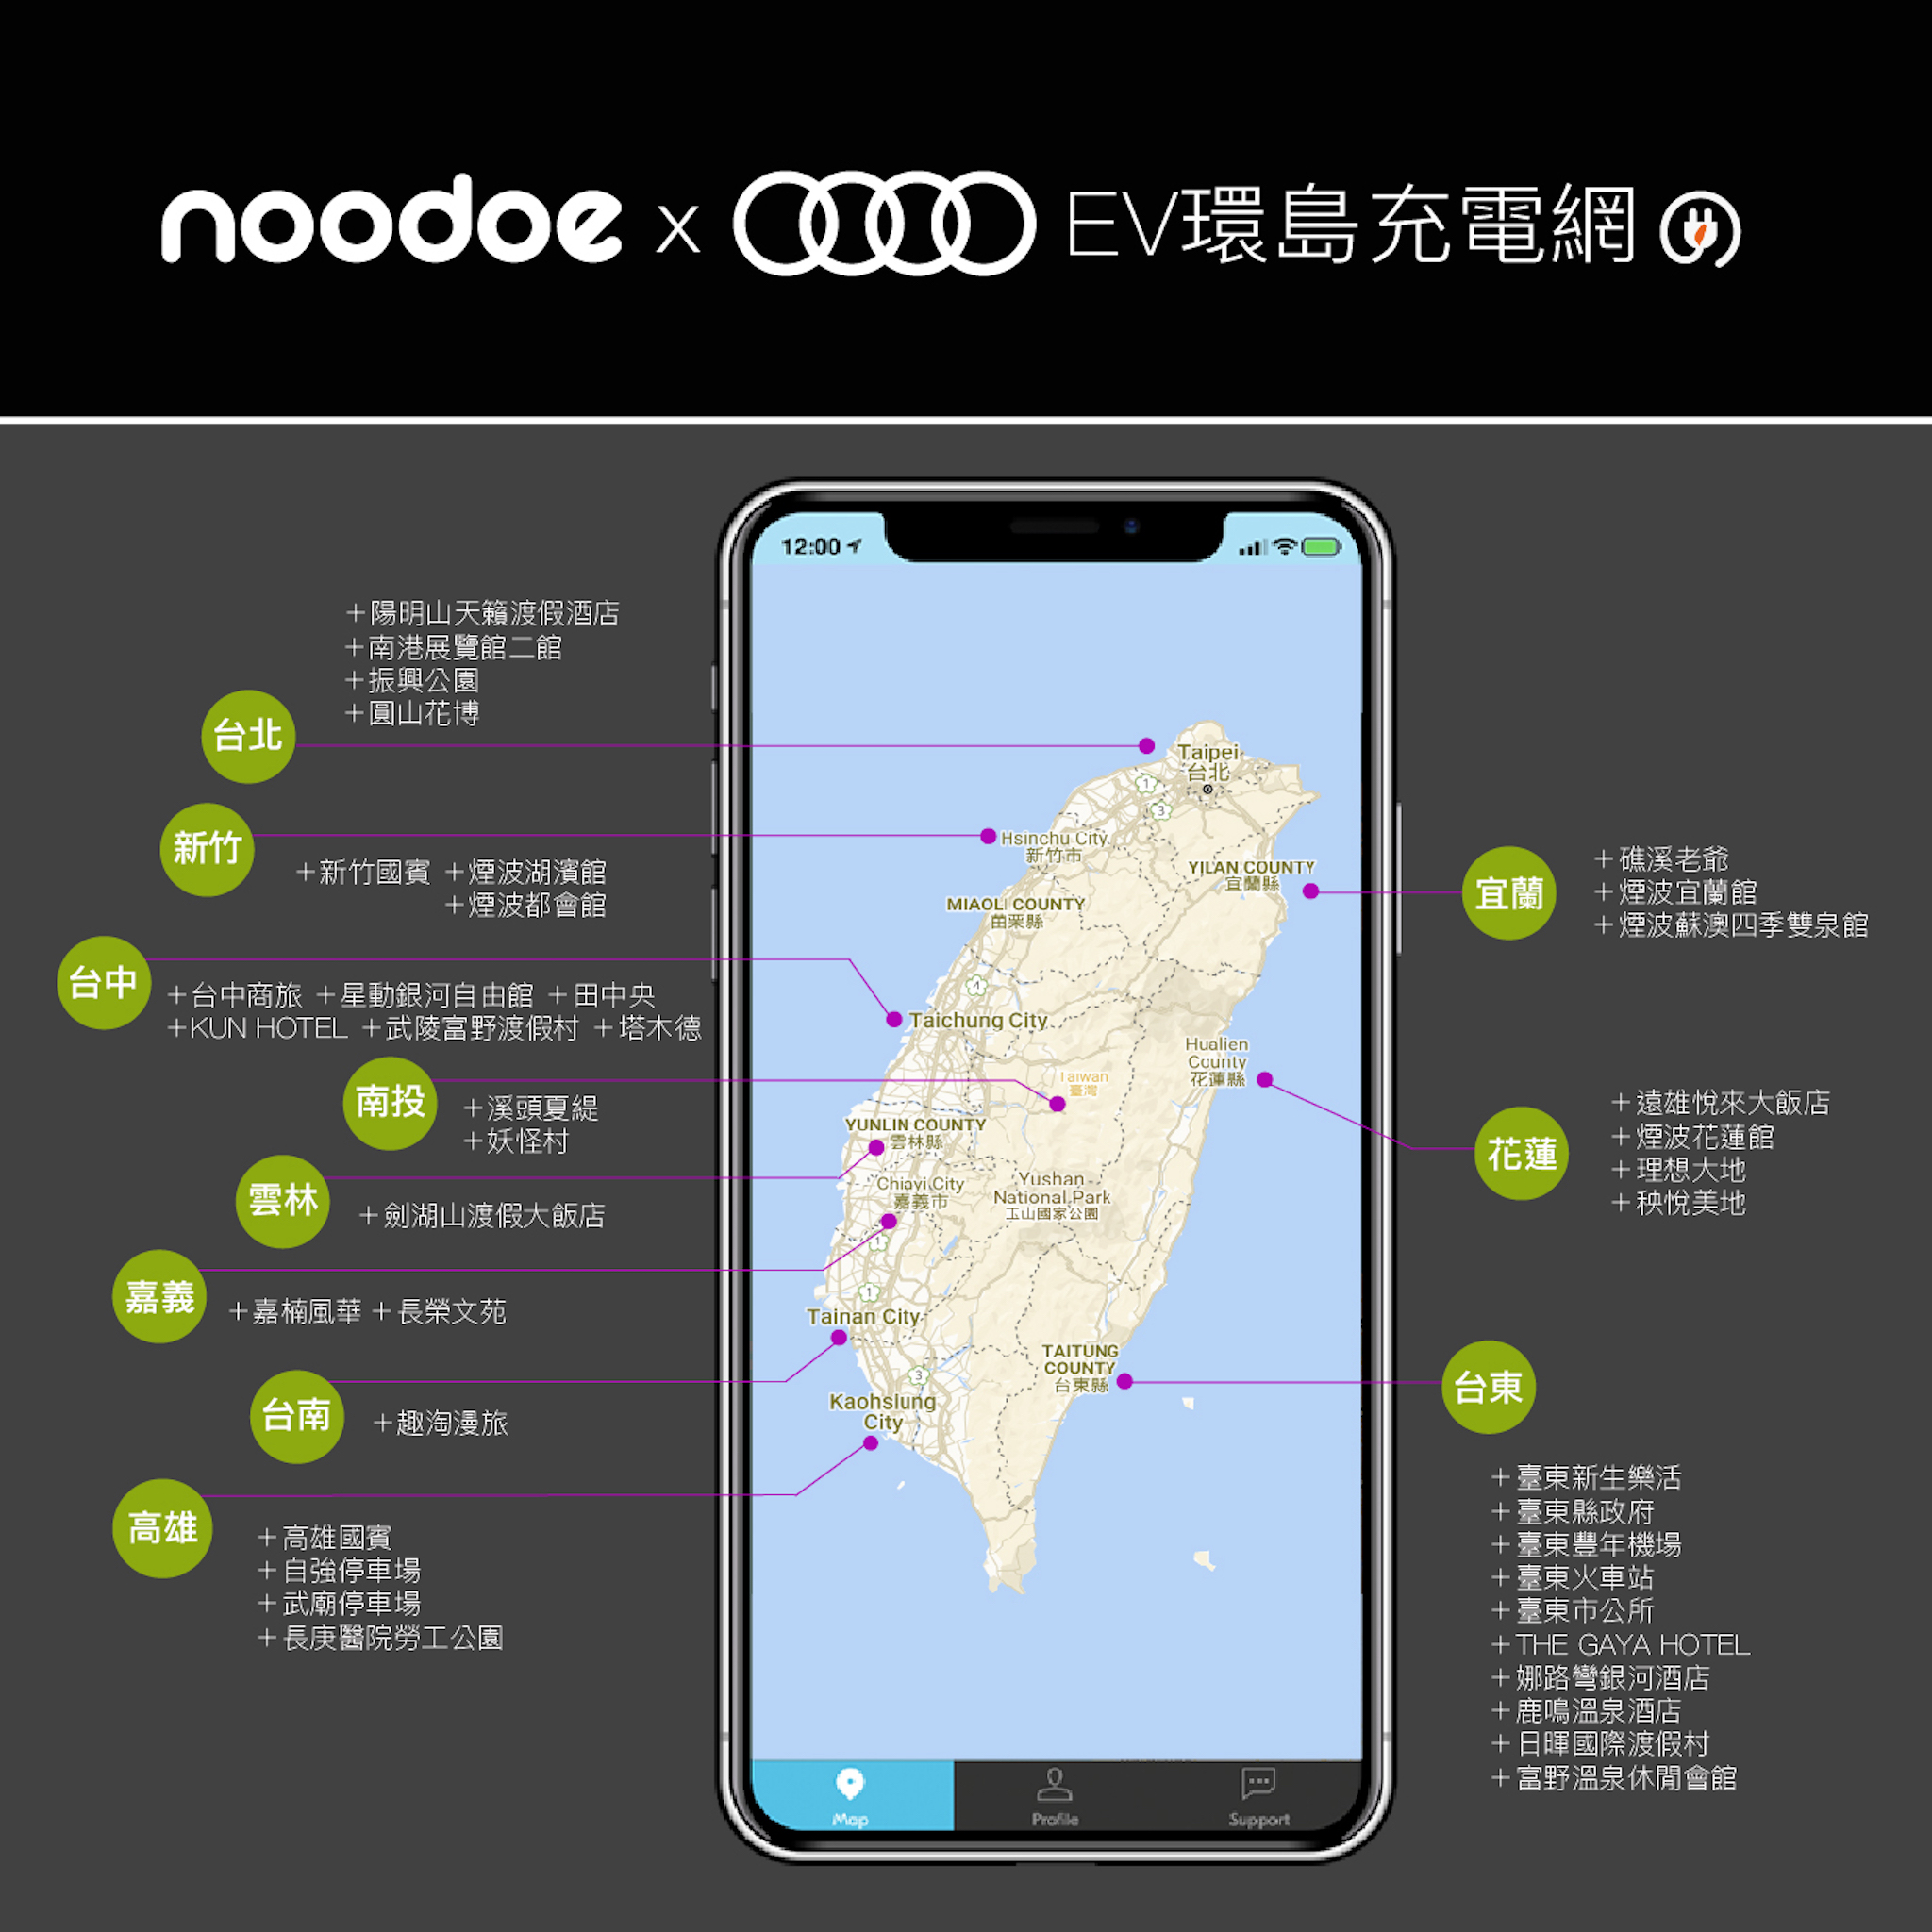 Noodoe EV 環島充電網據點圖。